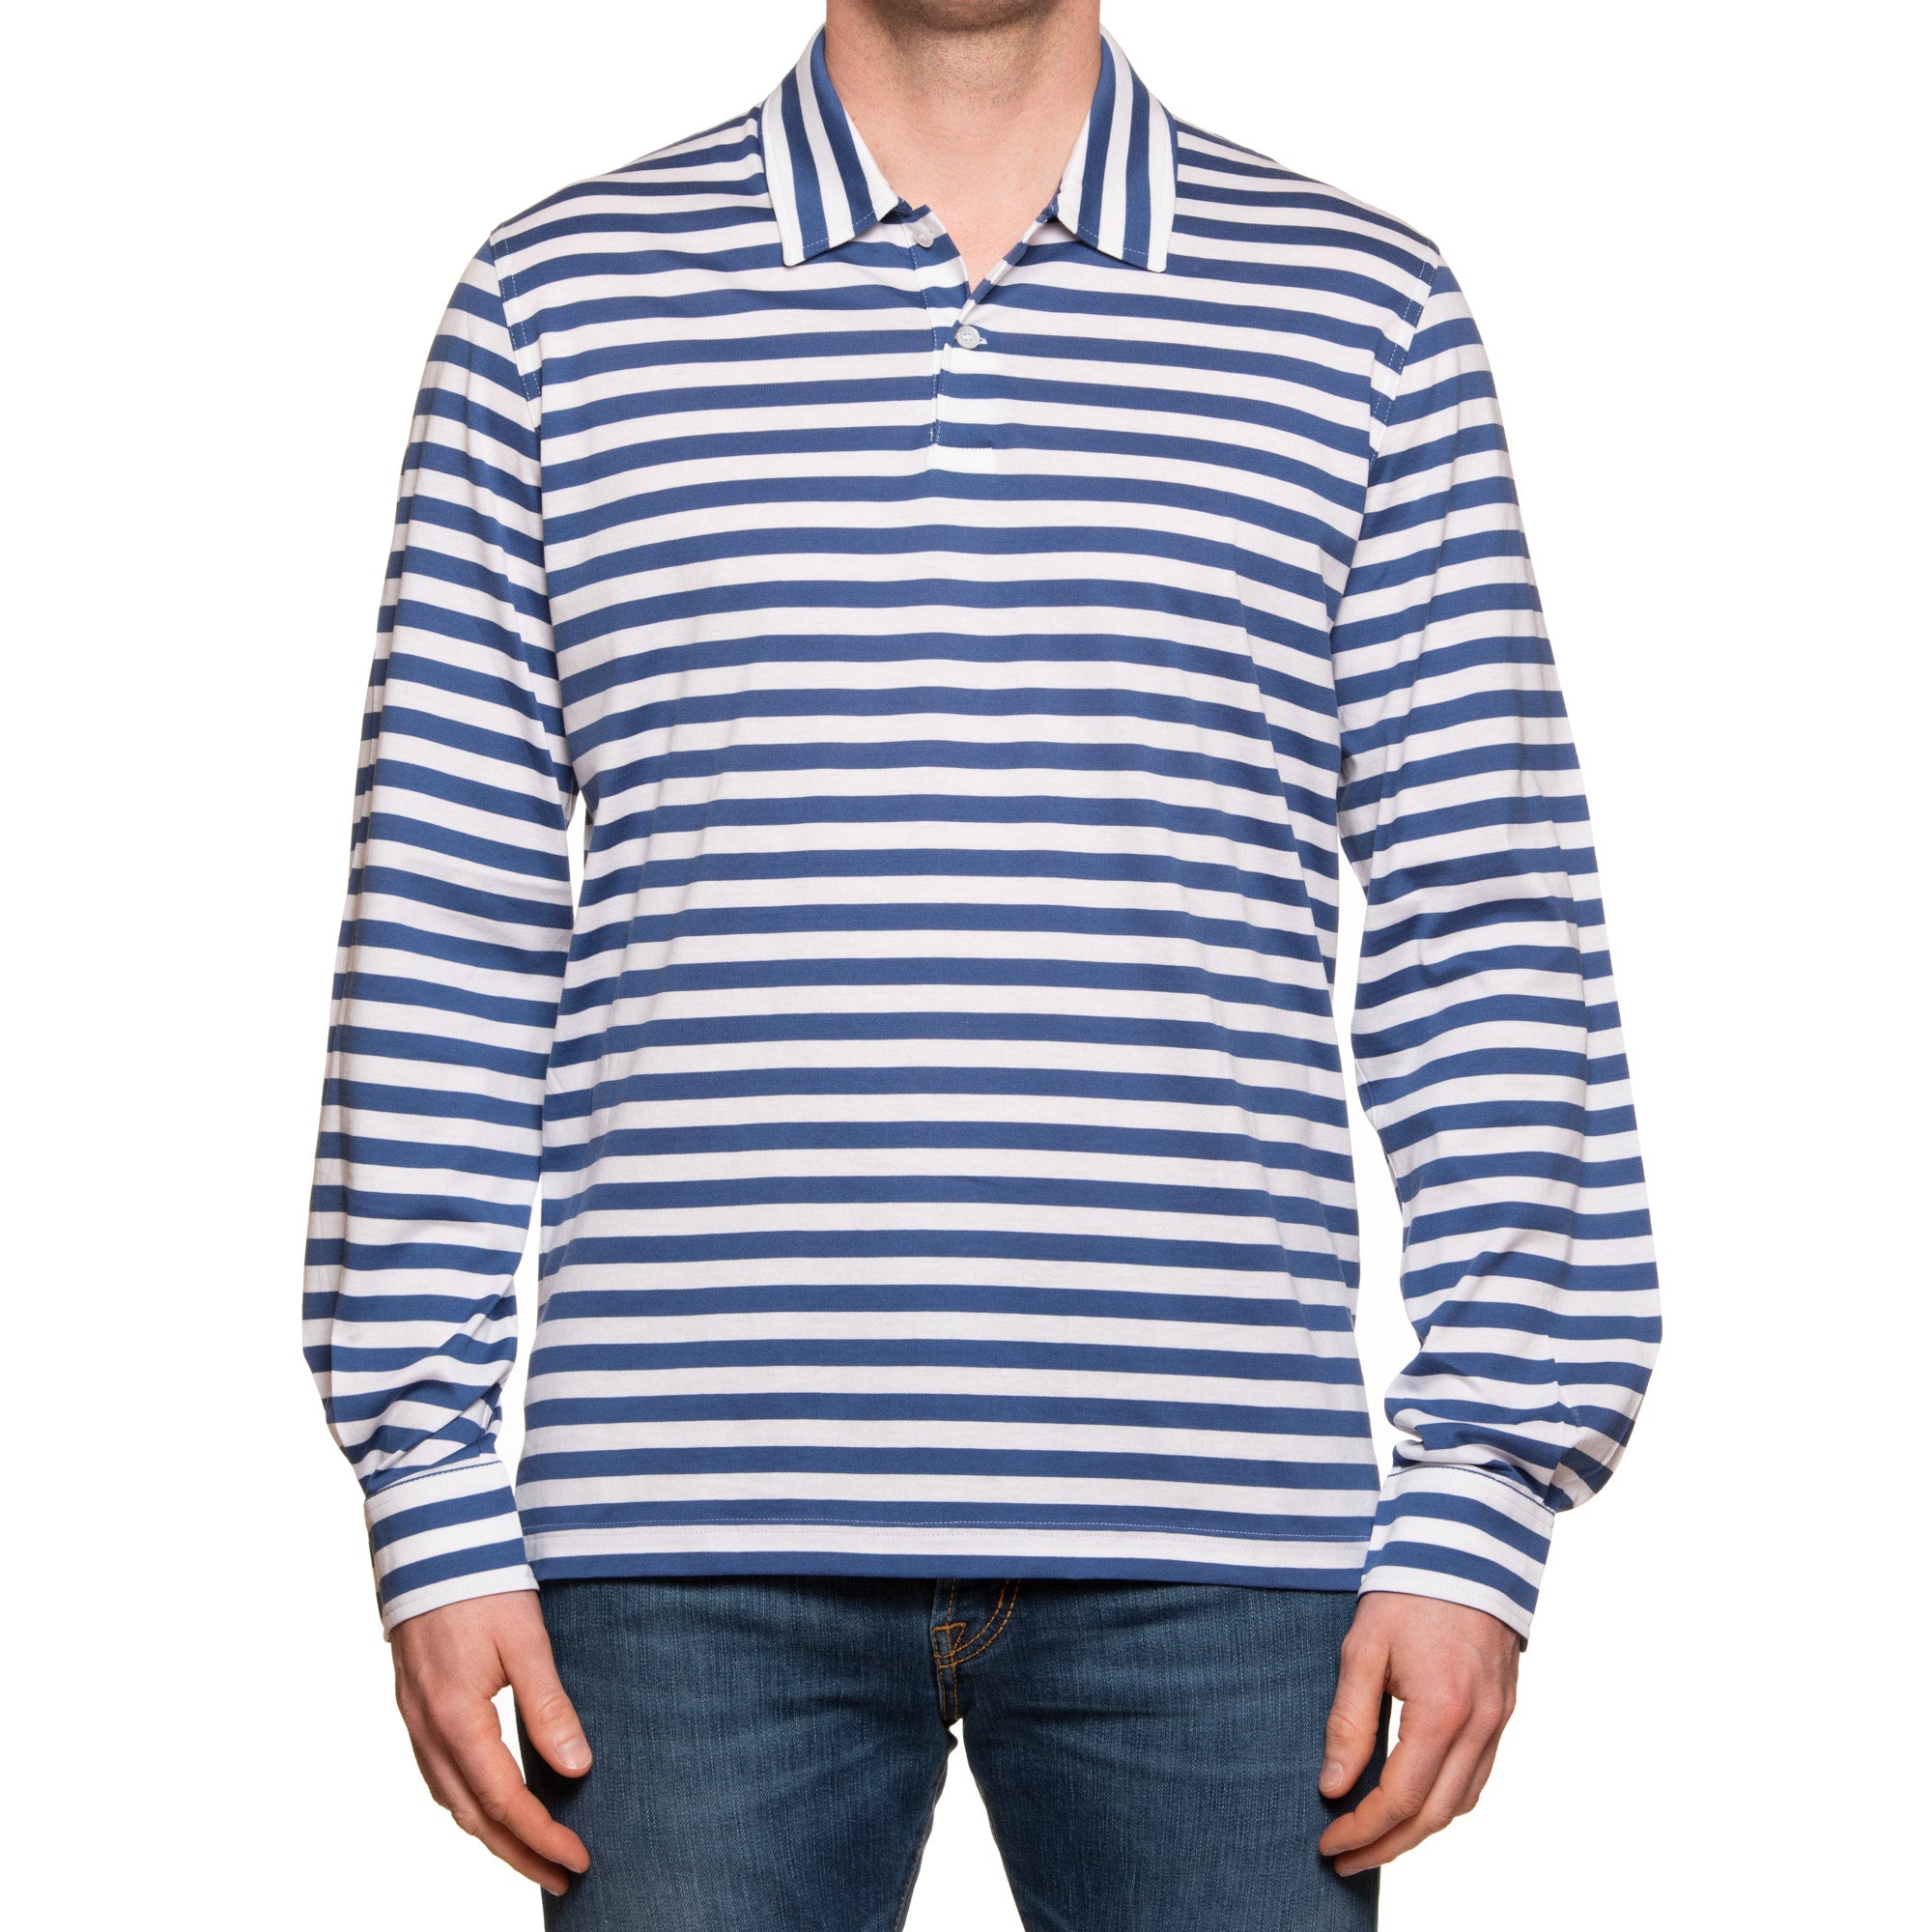 FEDELI "Florida" Blue Striped Cotton Jersey Long Sleeve Polo Shirt EU 56 NEW US 2XL FEDELI